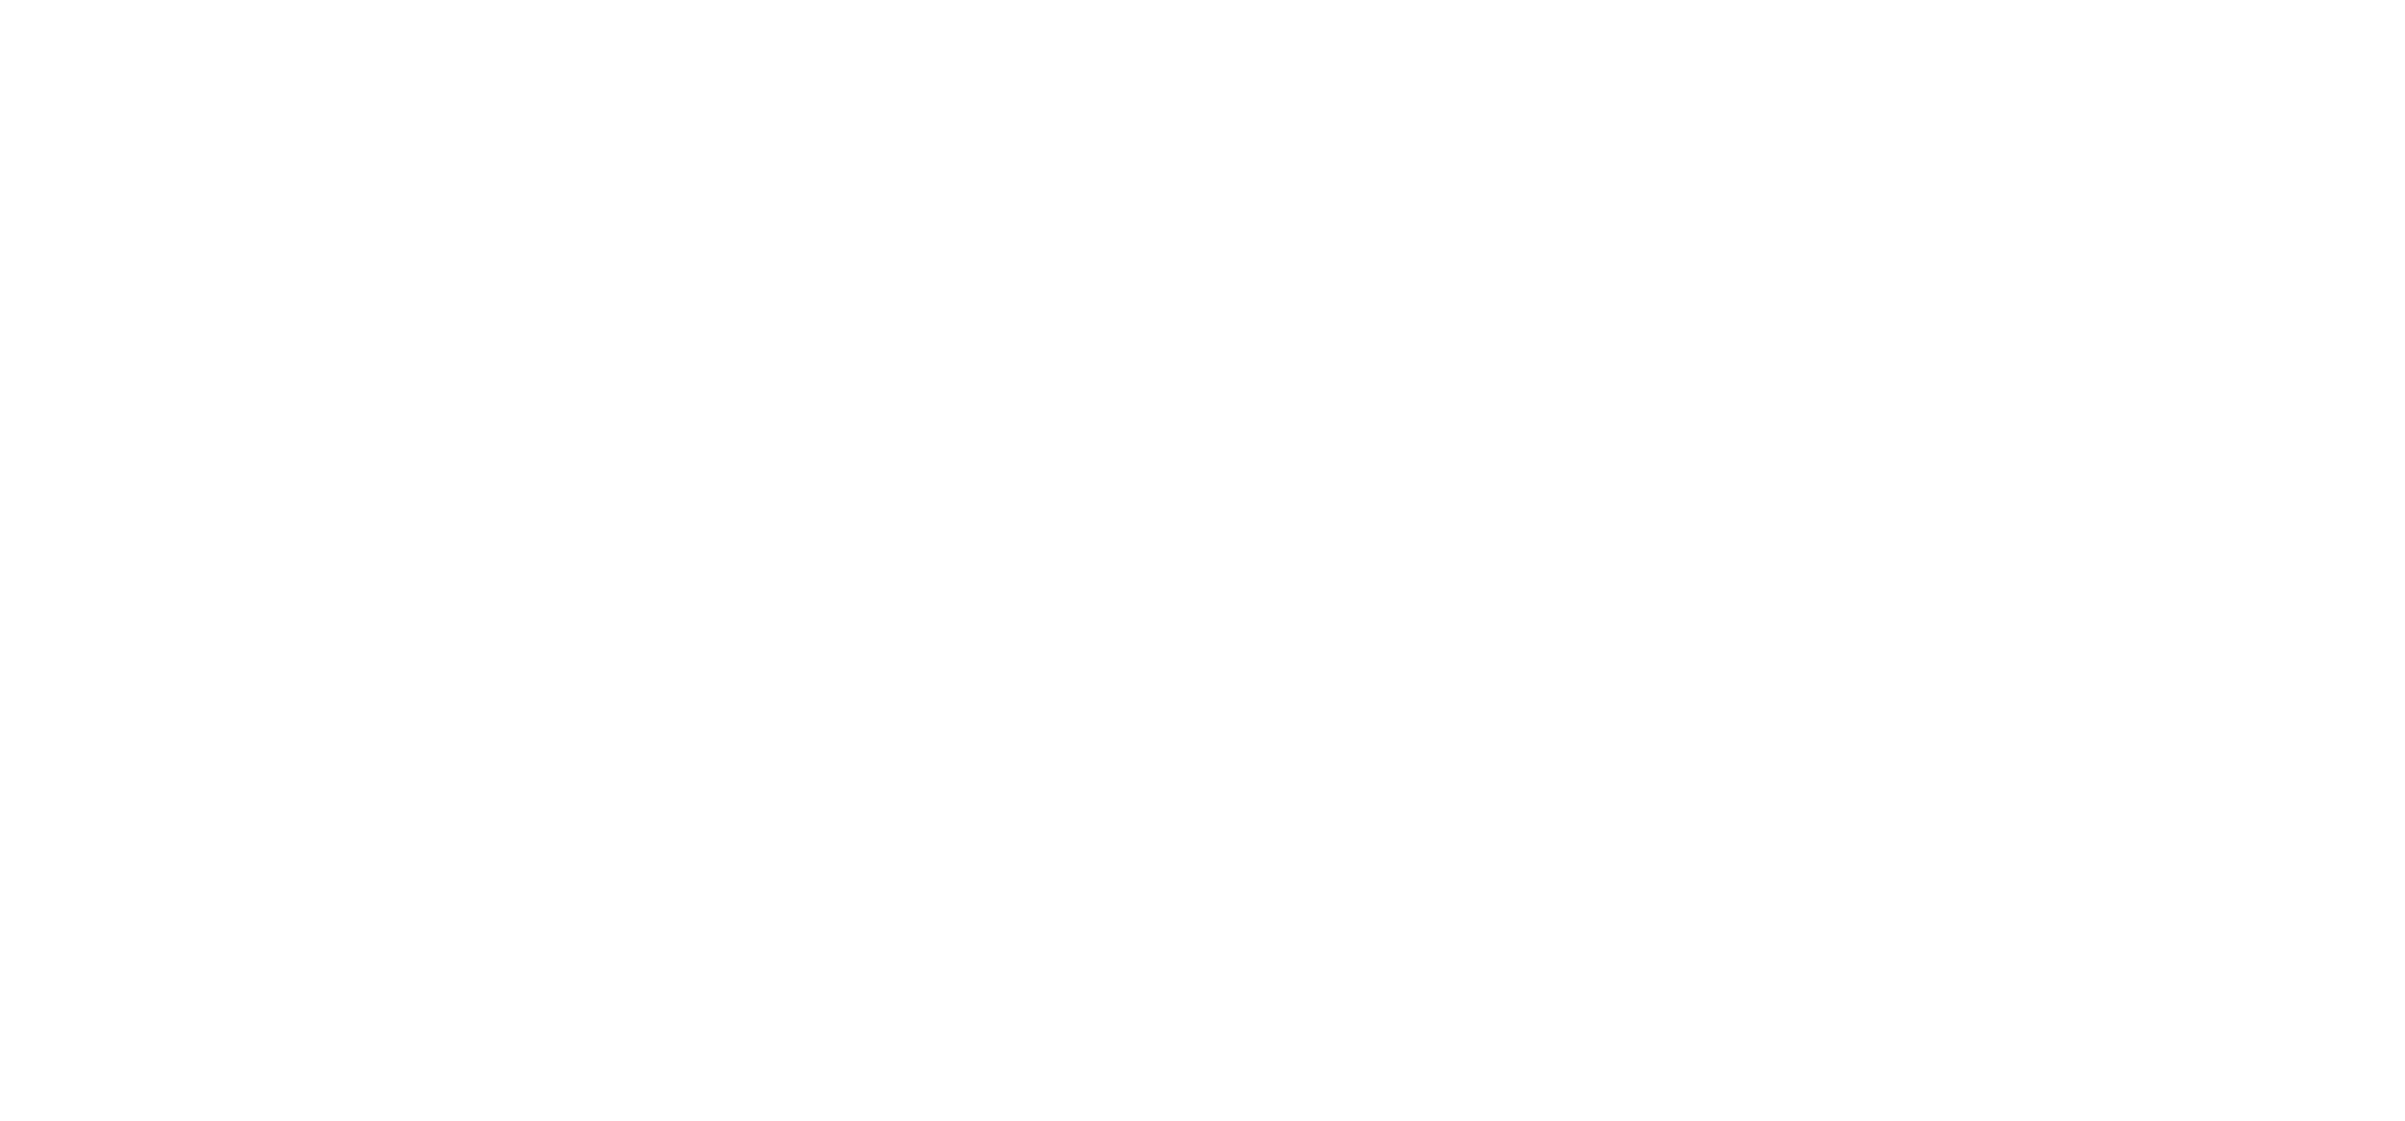 Journey Through Scripture